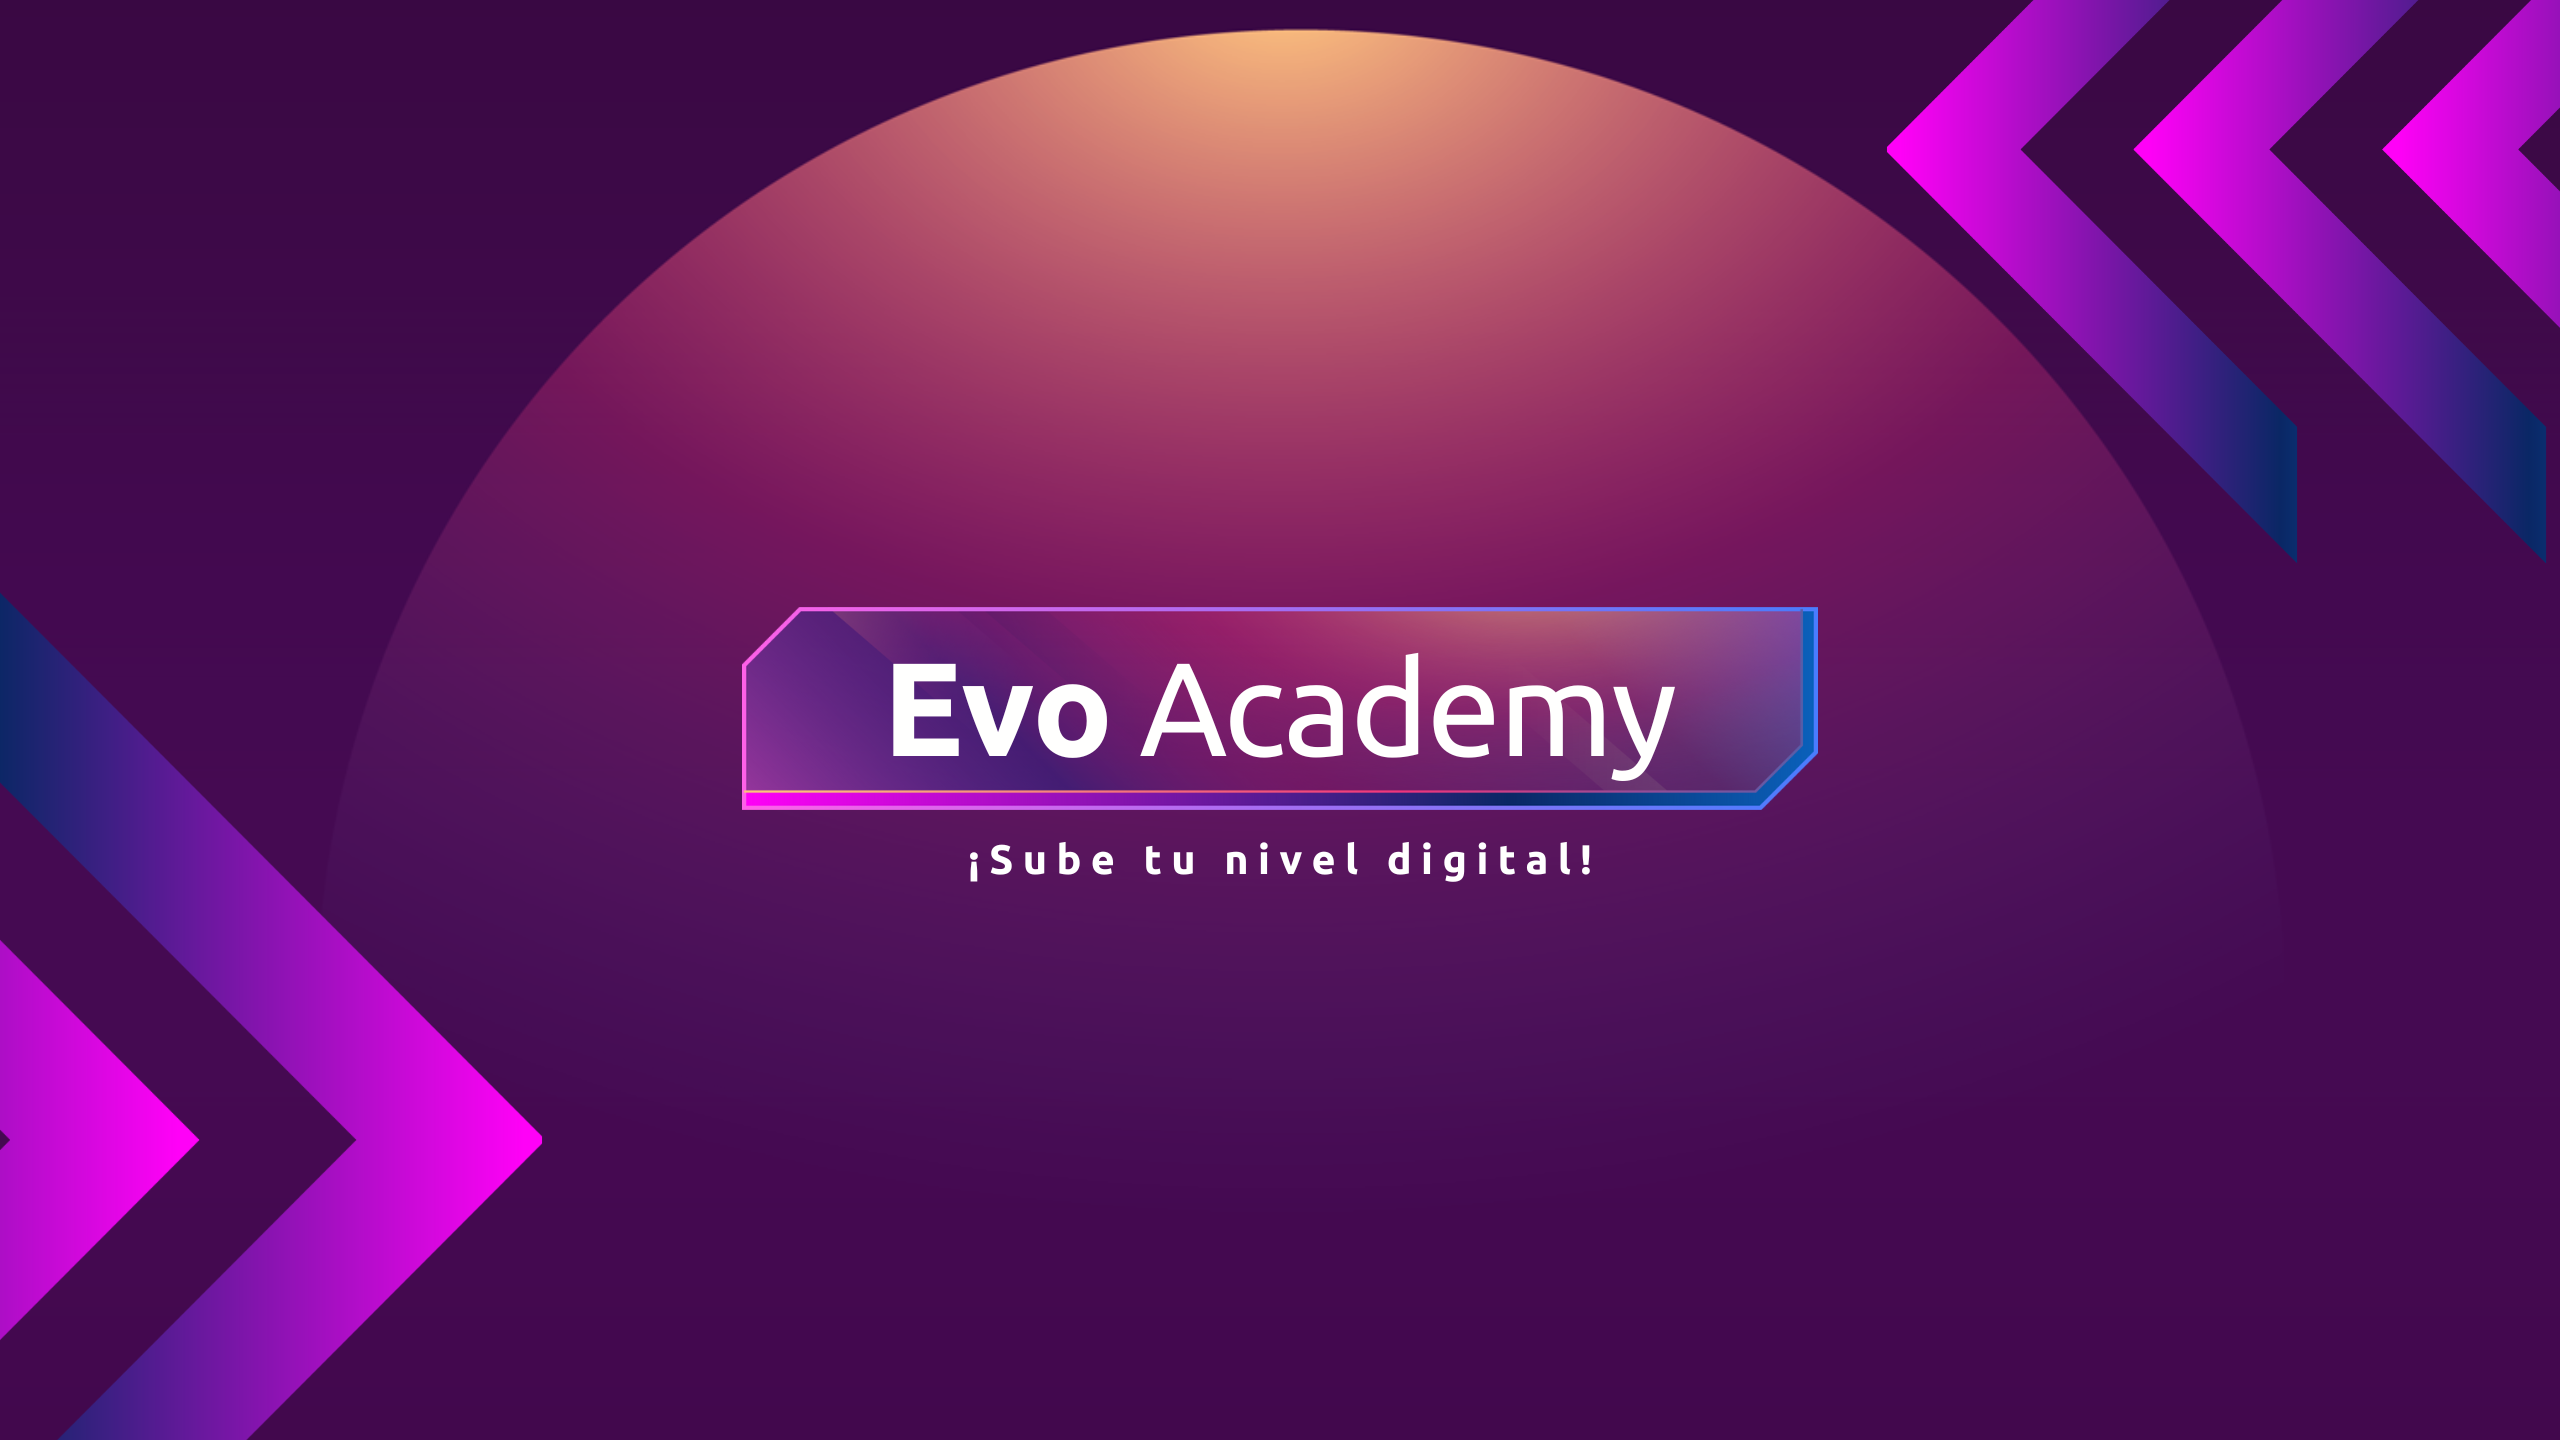 Evo Academy